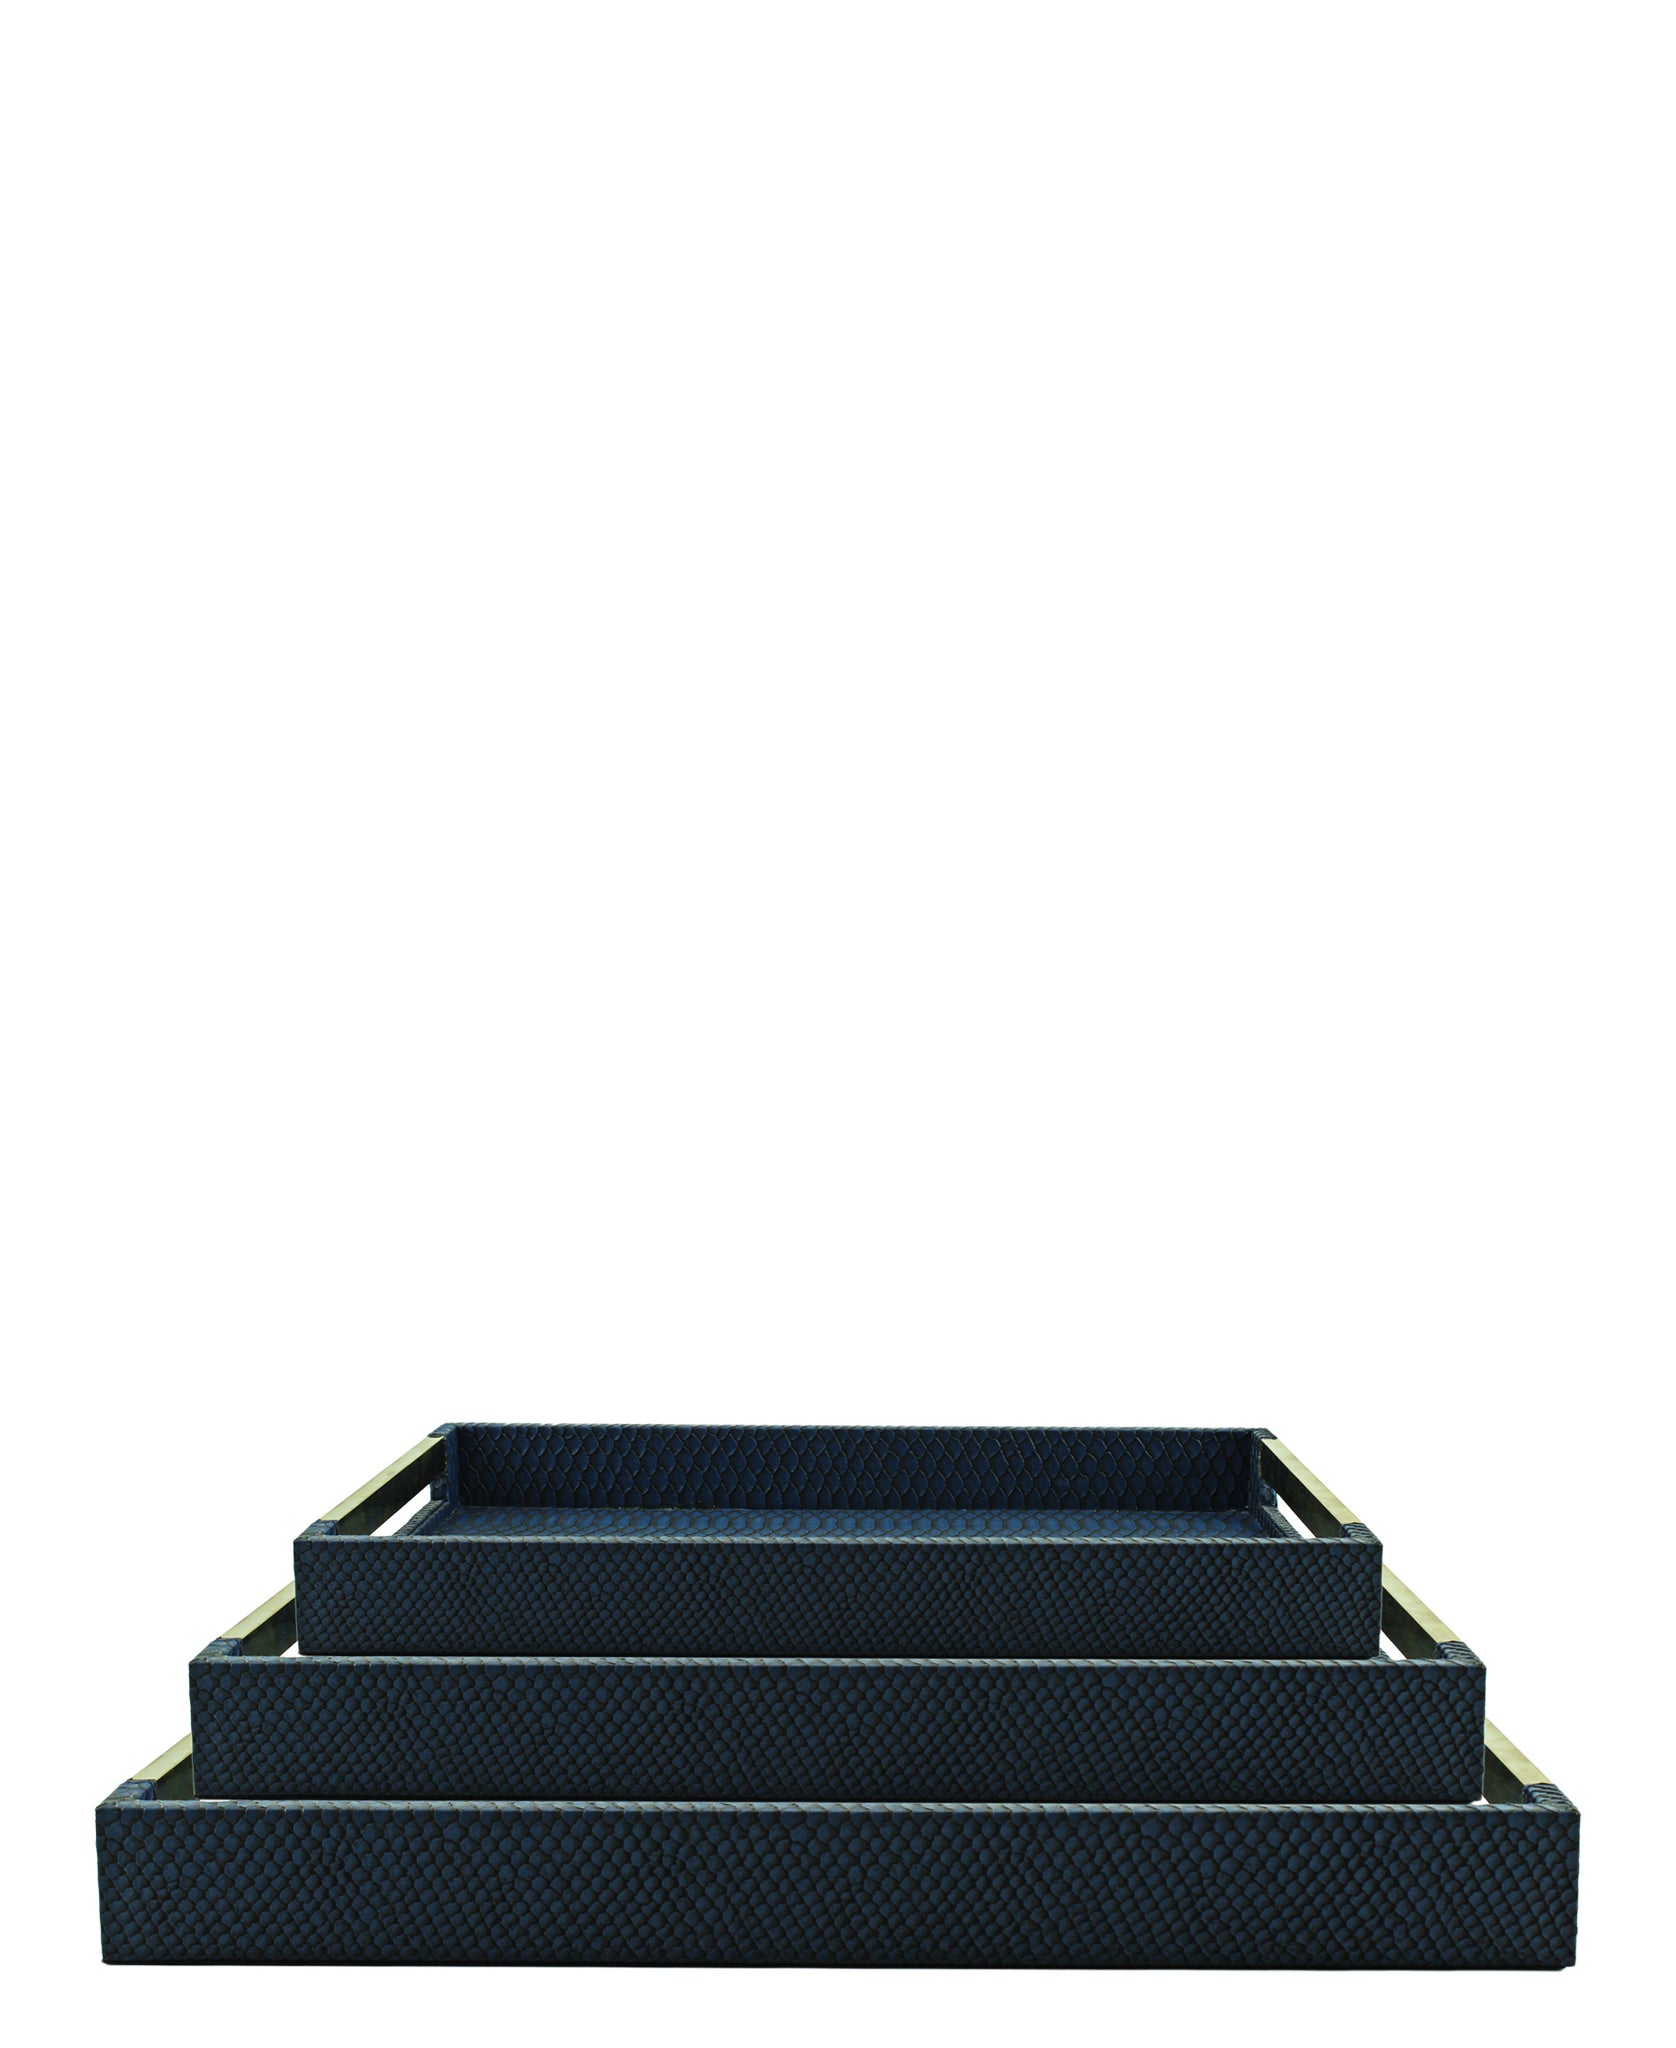 Urban Decor 3 Piece Shagreen Tray Set - Blue